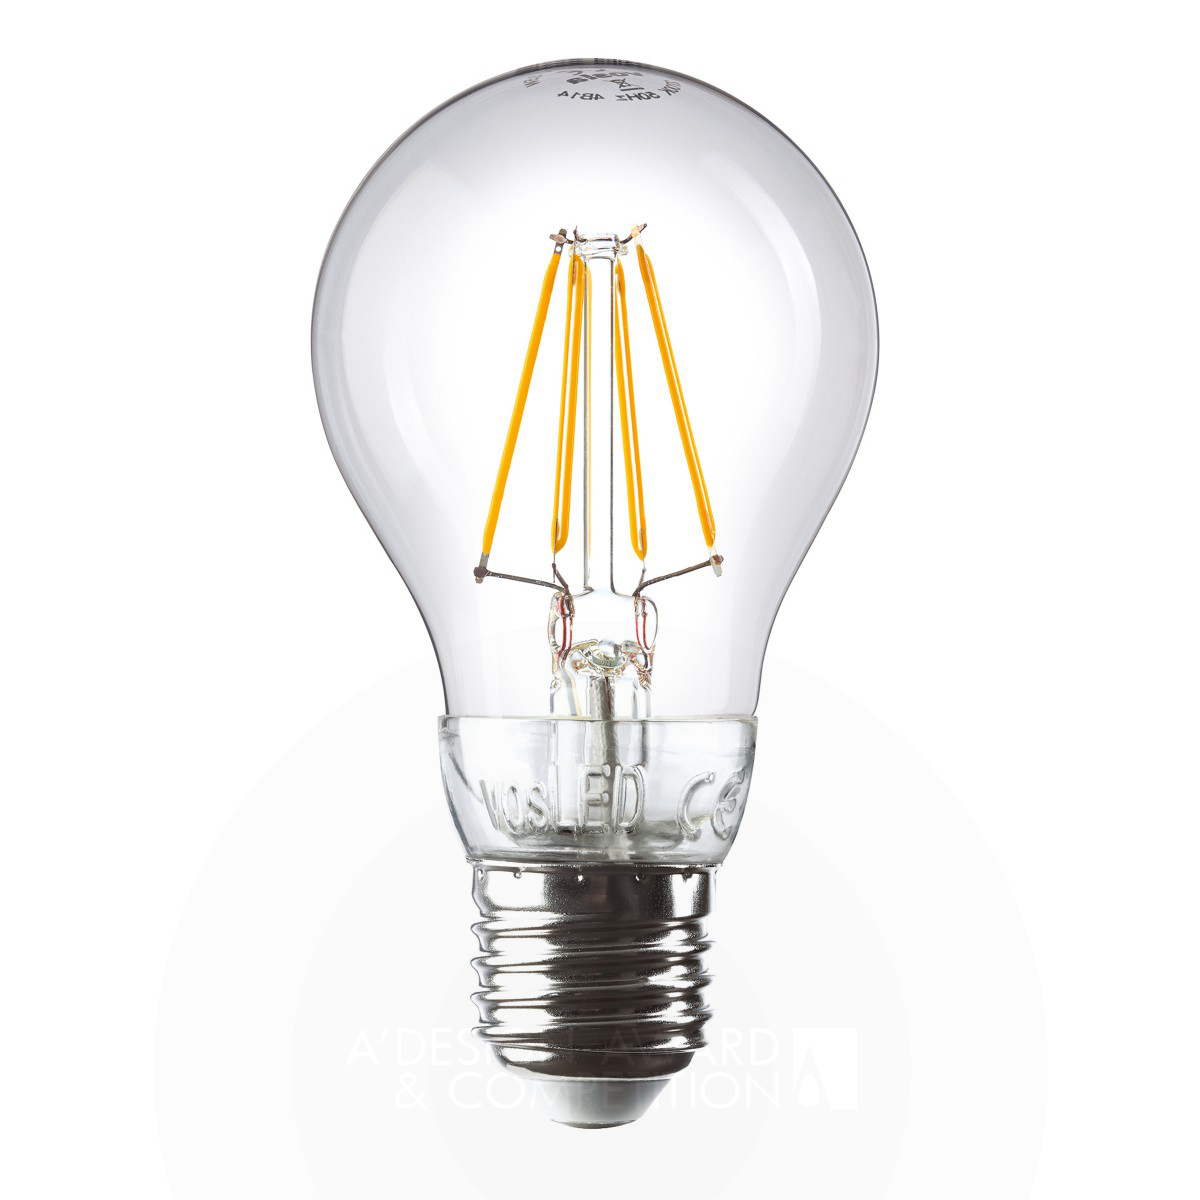 vosled <b>LED-filament light bulb